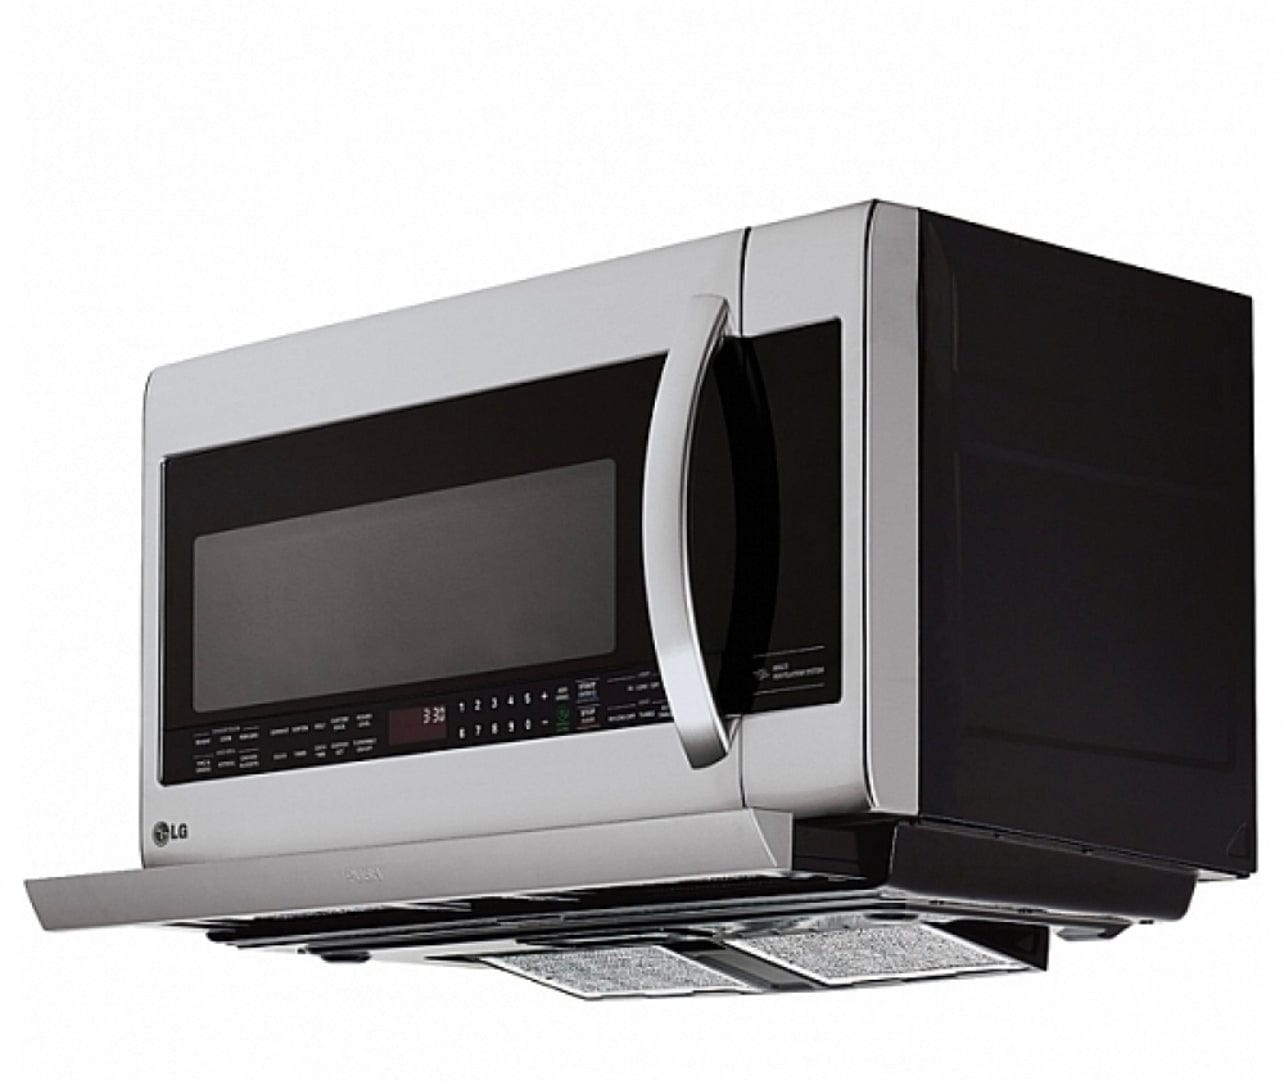 LG LMV2257ST Over the Range Microwave, 2.2 cu. ft. Capacity, 400 CFM, 1000W Watts, LED, 30" Exterior Width, Black Stainless Steel colour